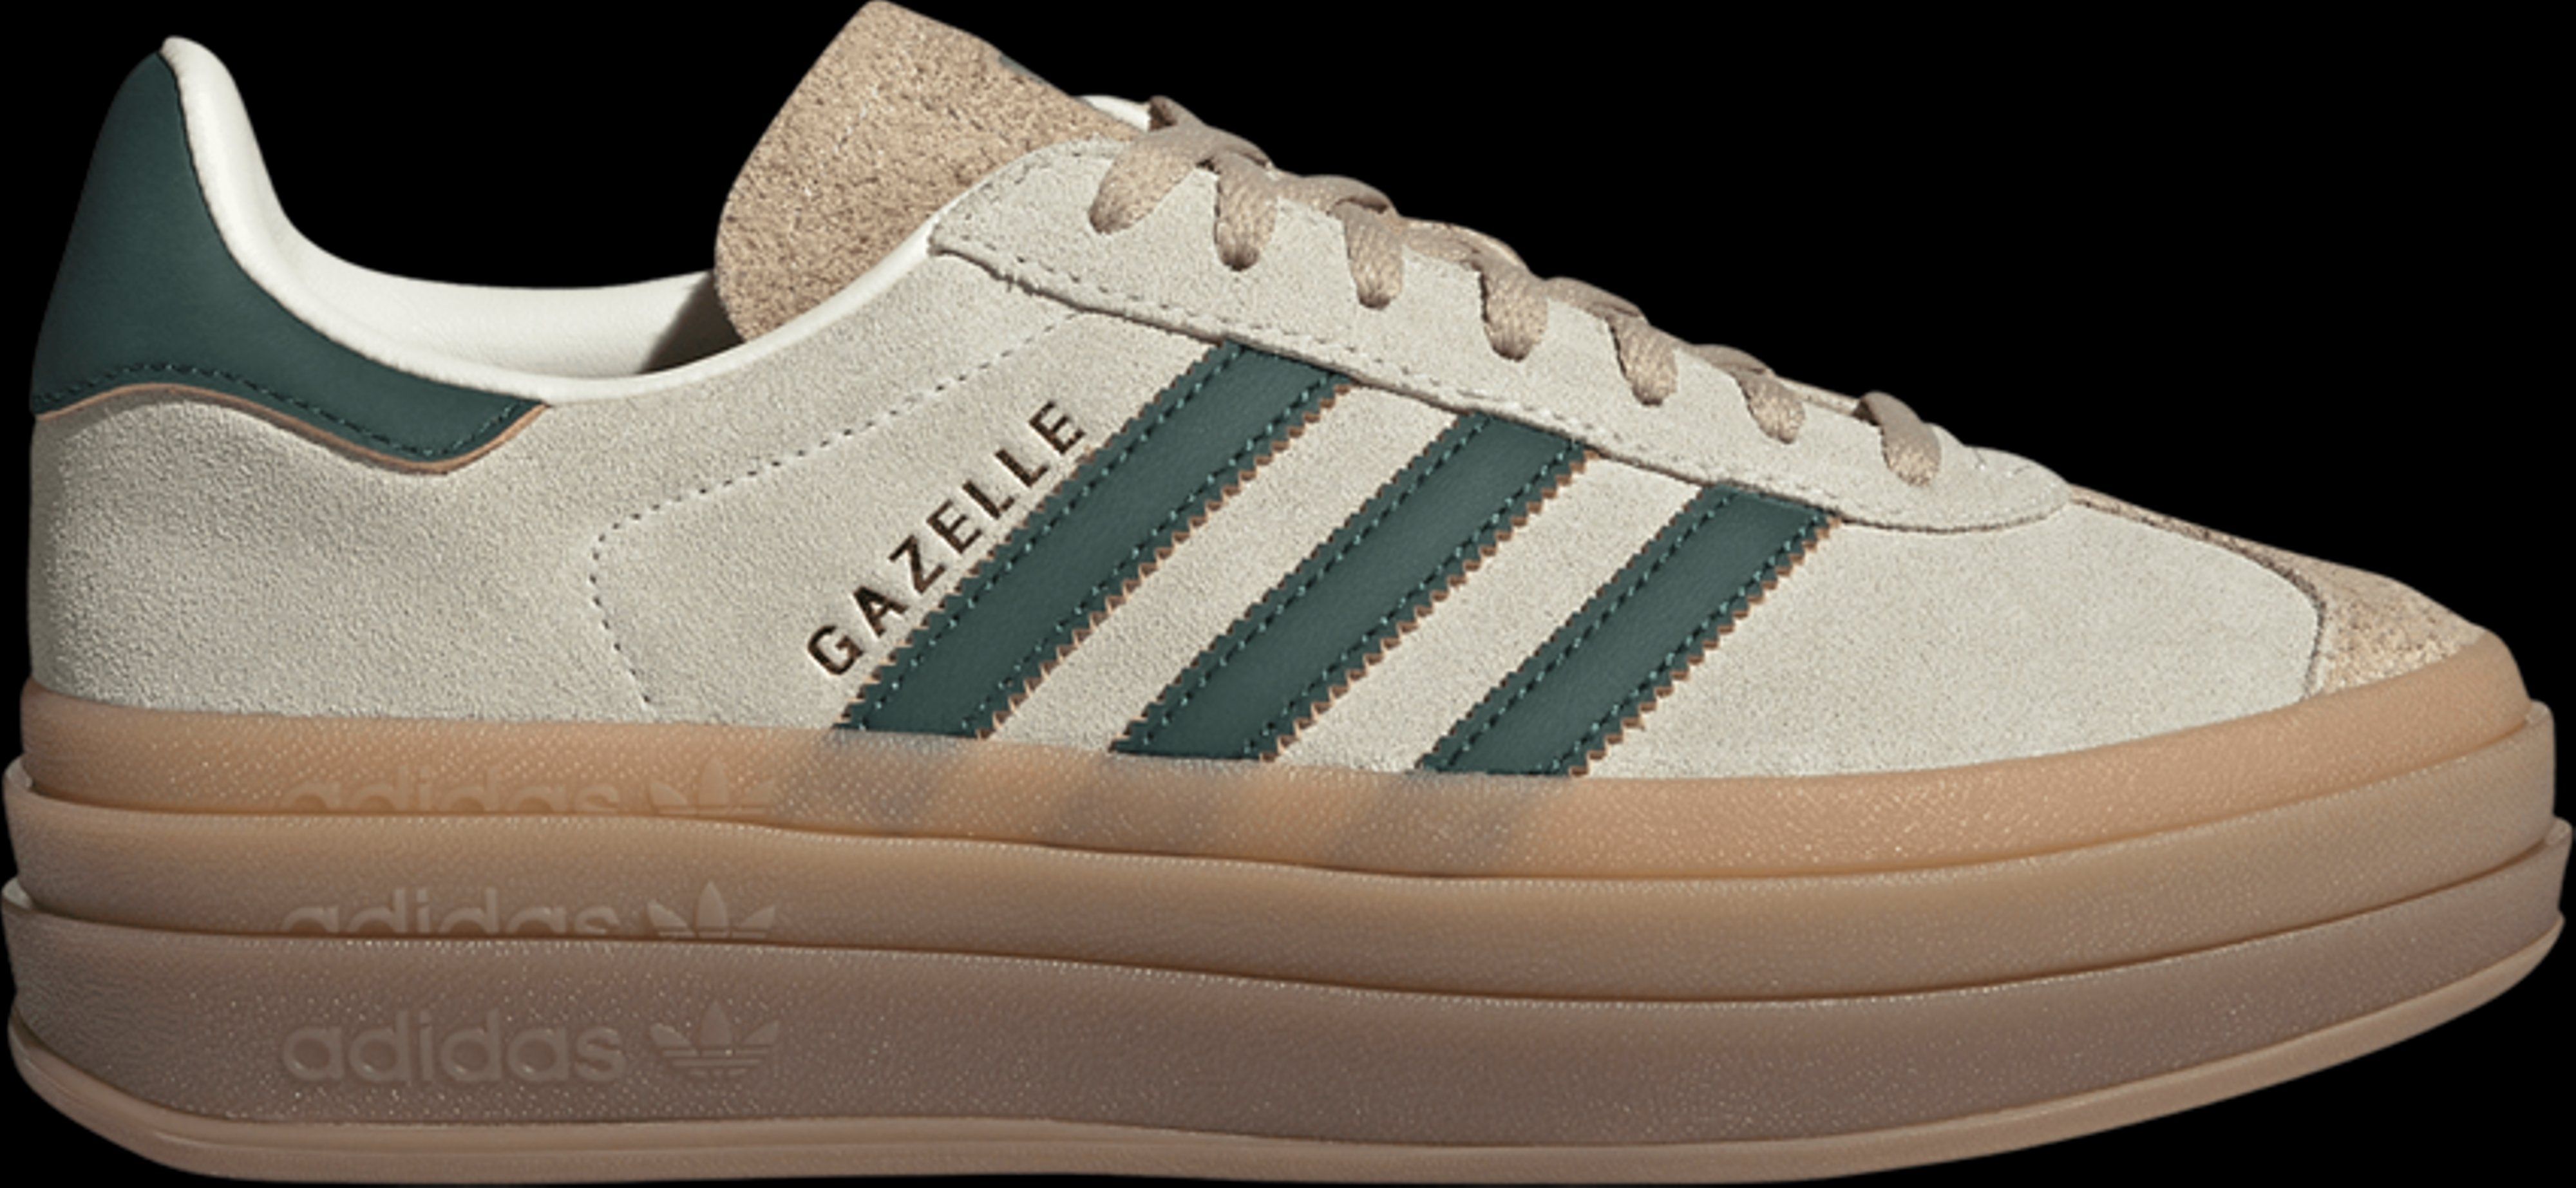 Buy Wmns Gazelle Bold 'Cream Collegiate Green' - ID7056 - Cream | GOAT | GOAT